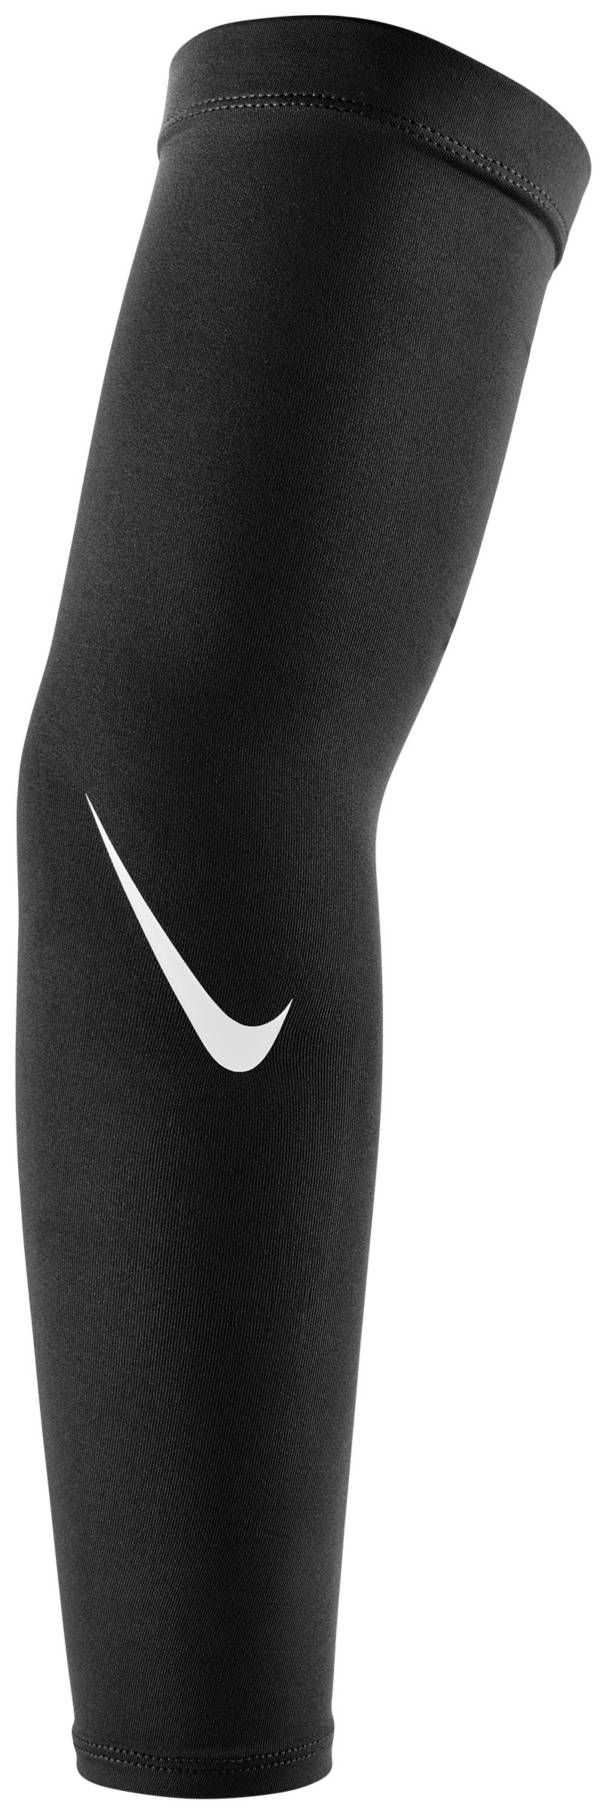 viceversa El cuarto frutas Nike Pro Adult Dri-FIT 4.0 Arm Sleeves | Dick's Sporting Goods